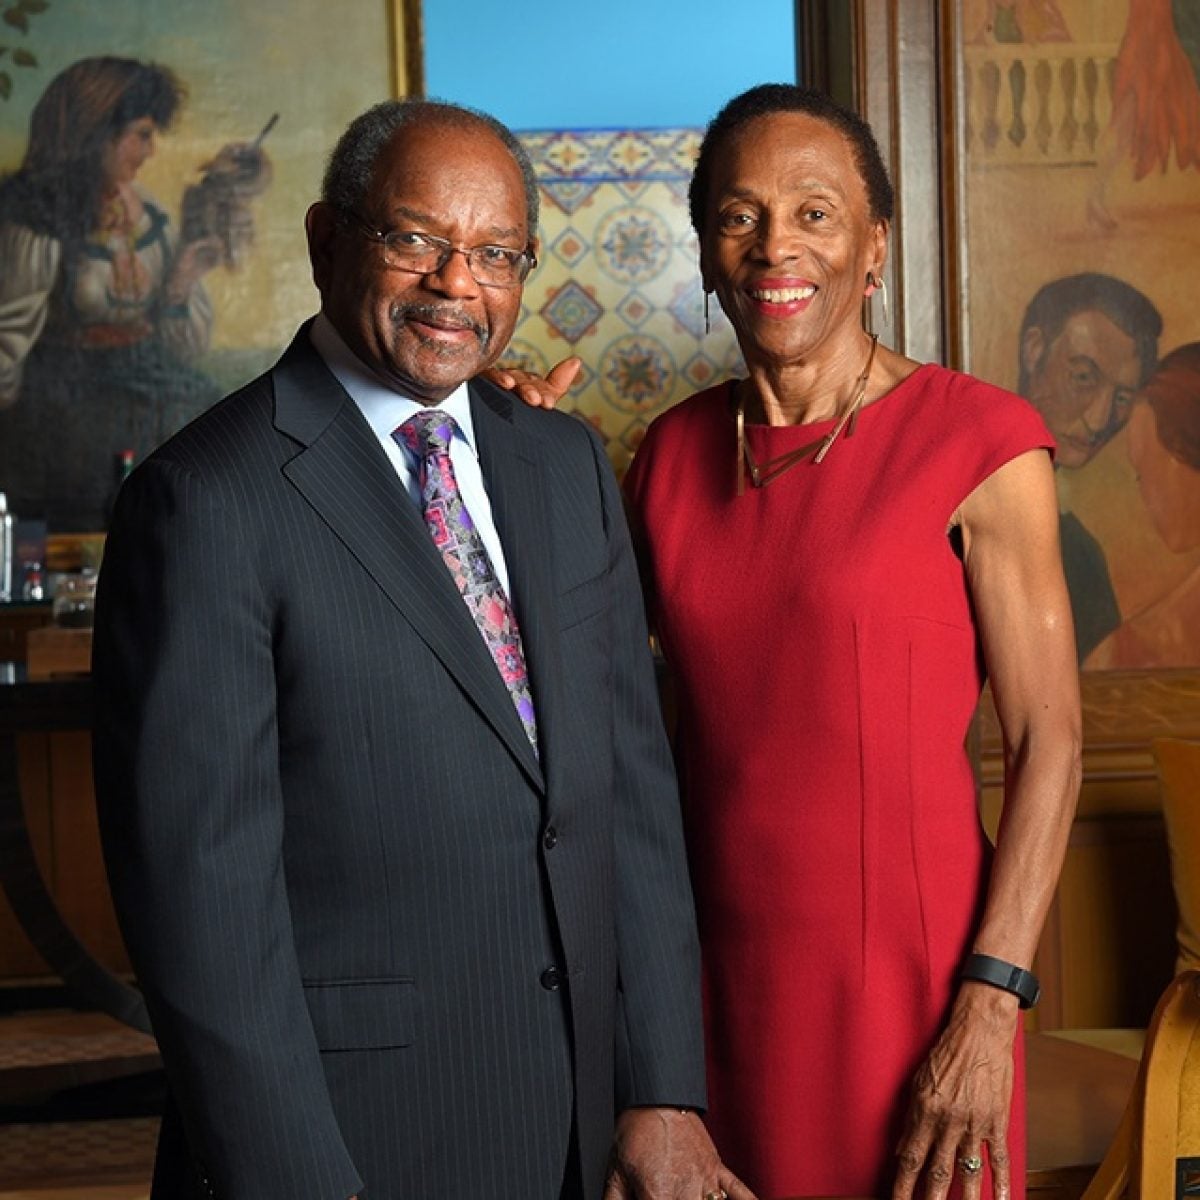 Howard University Receives $5 Million From Black Couple